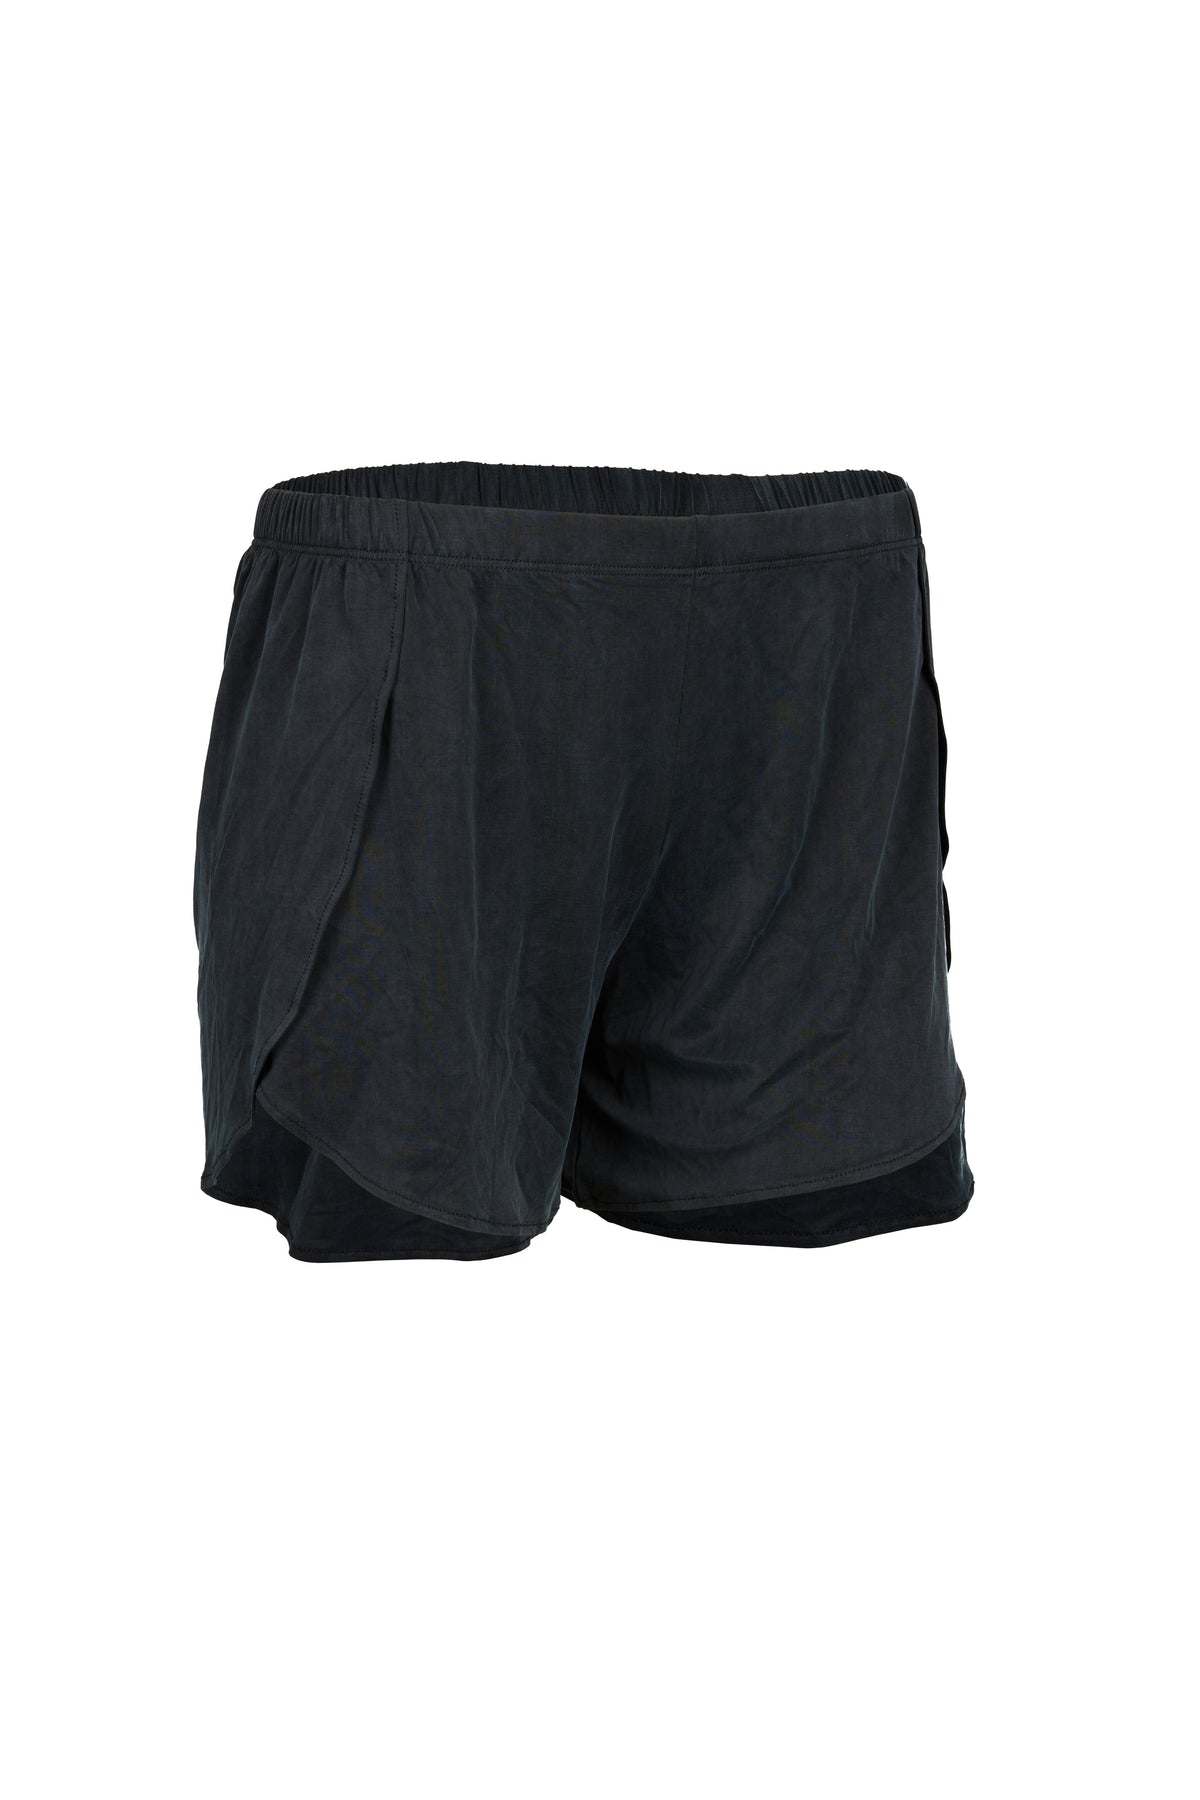 Cupro Lounge Shorts - graphite